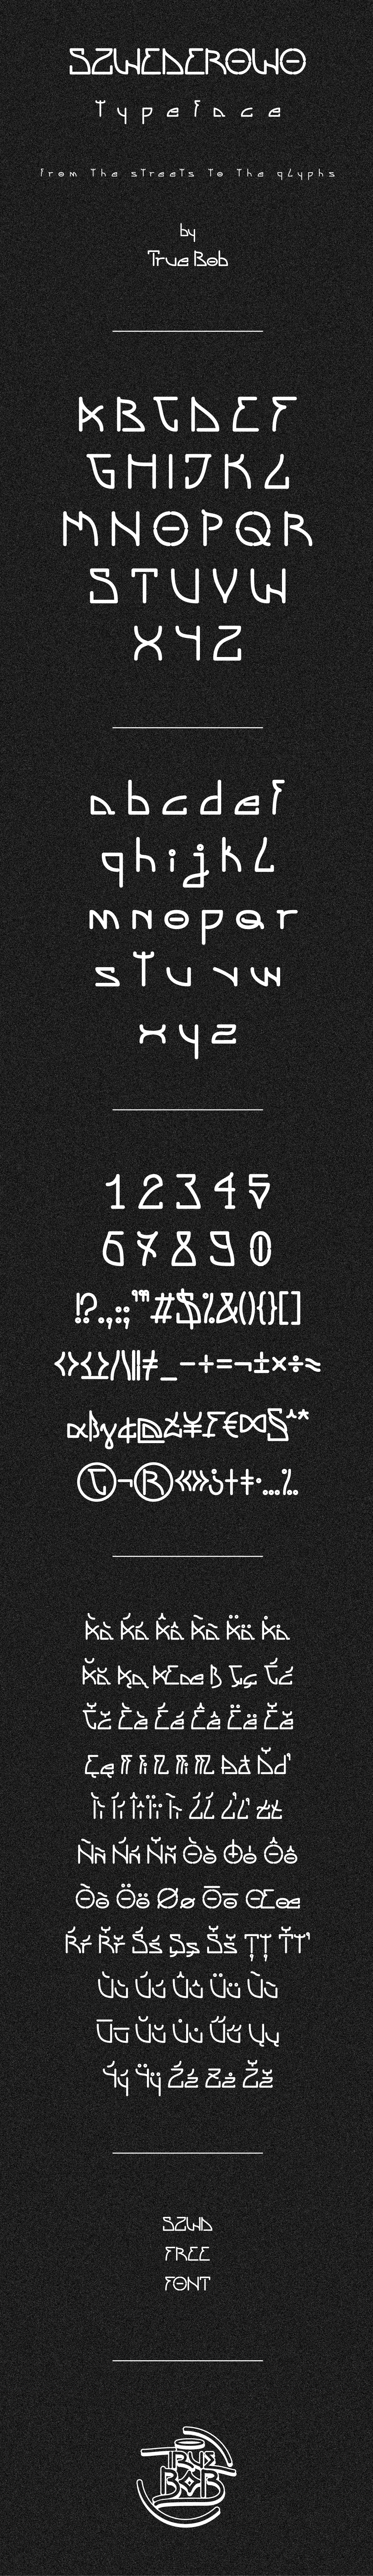 font Typeface free true Bob szwderowo glyphs ligature download alphabet